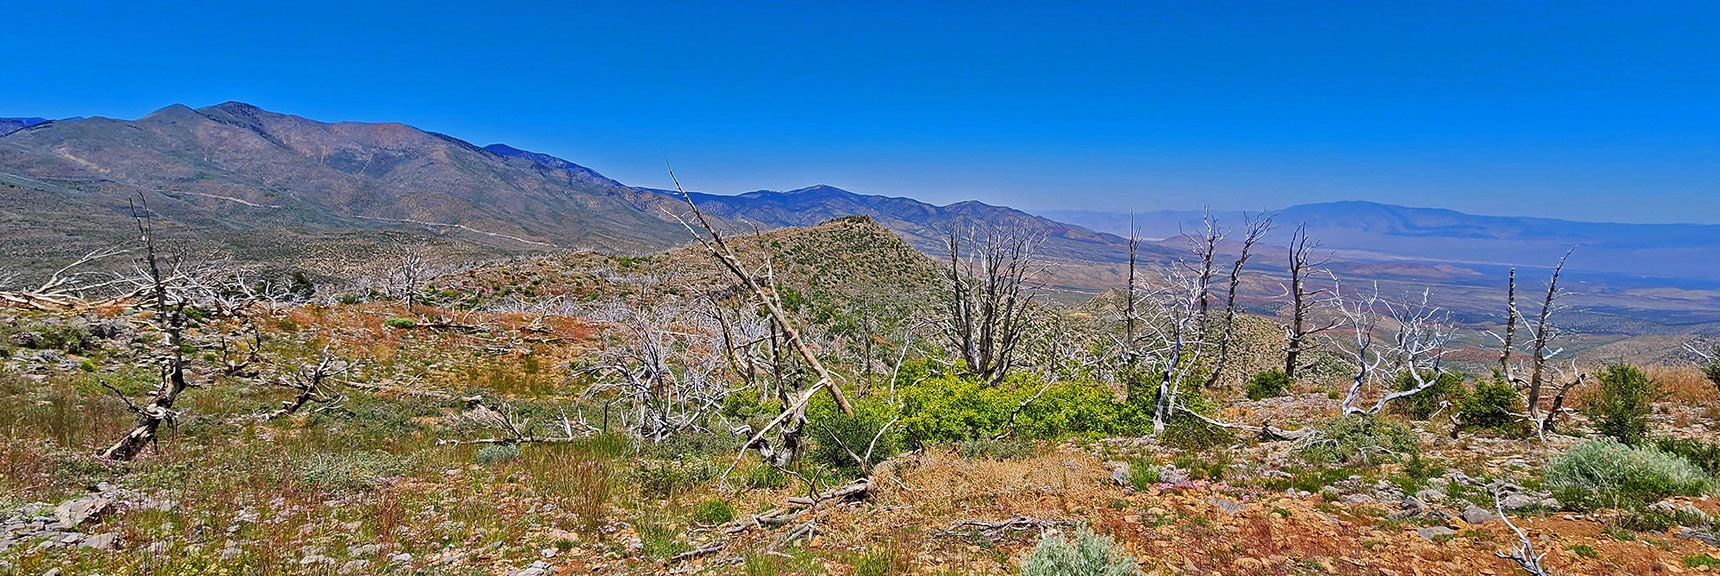 Kyle Canyon Below Toward Faint Sheep Range (right) | Wilson Ridge Lovell Canyon Loop | Lovell Canyon, Nevada